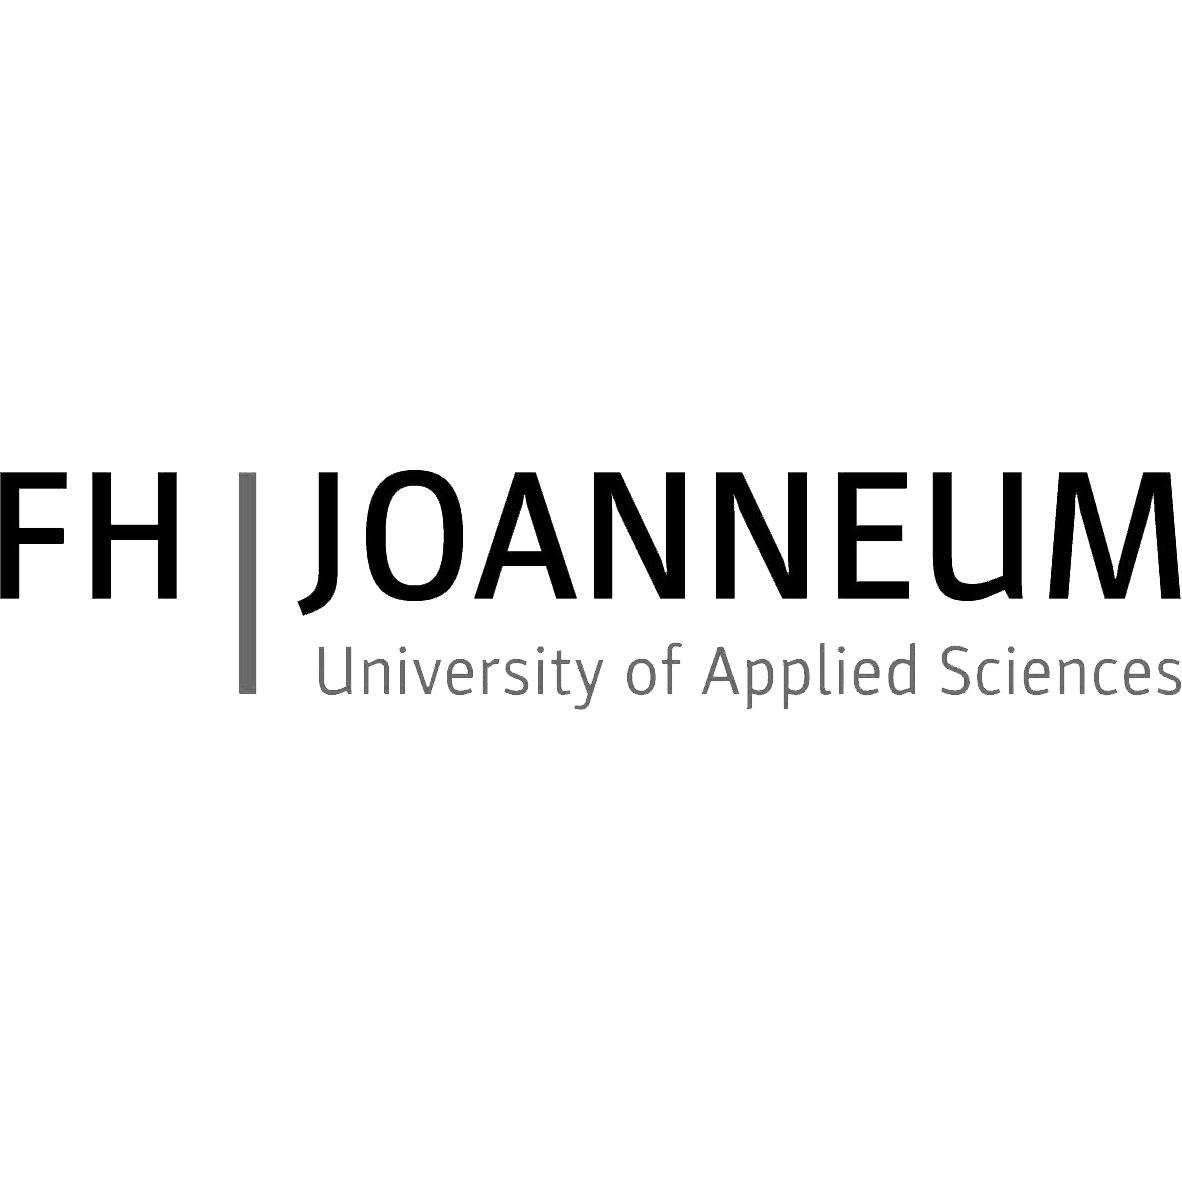 fh-joanneum-logo-1